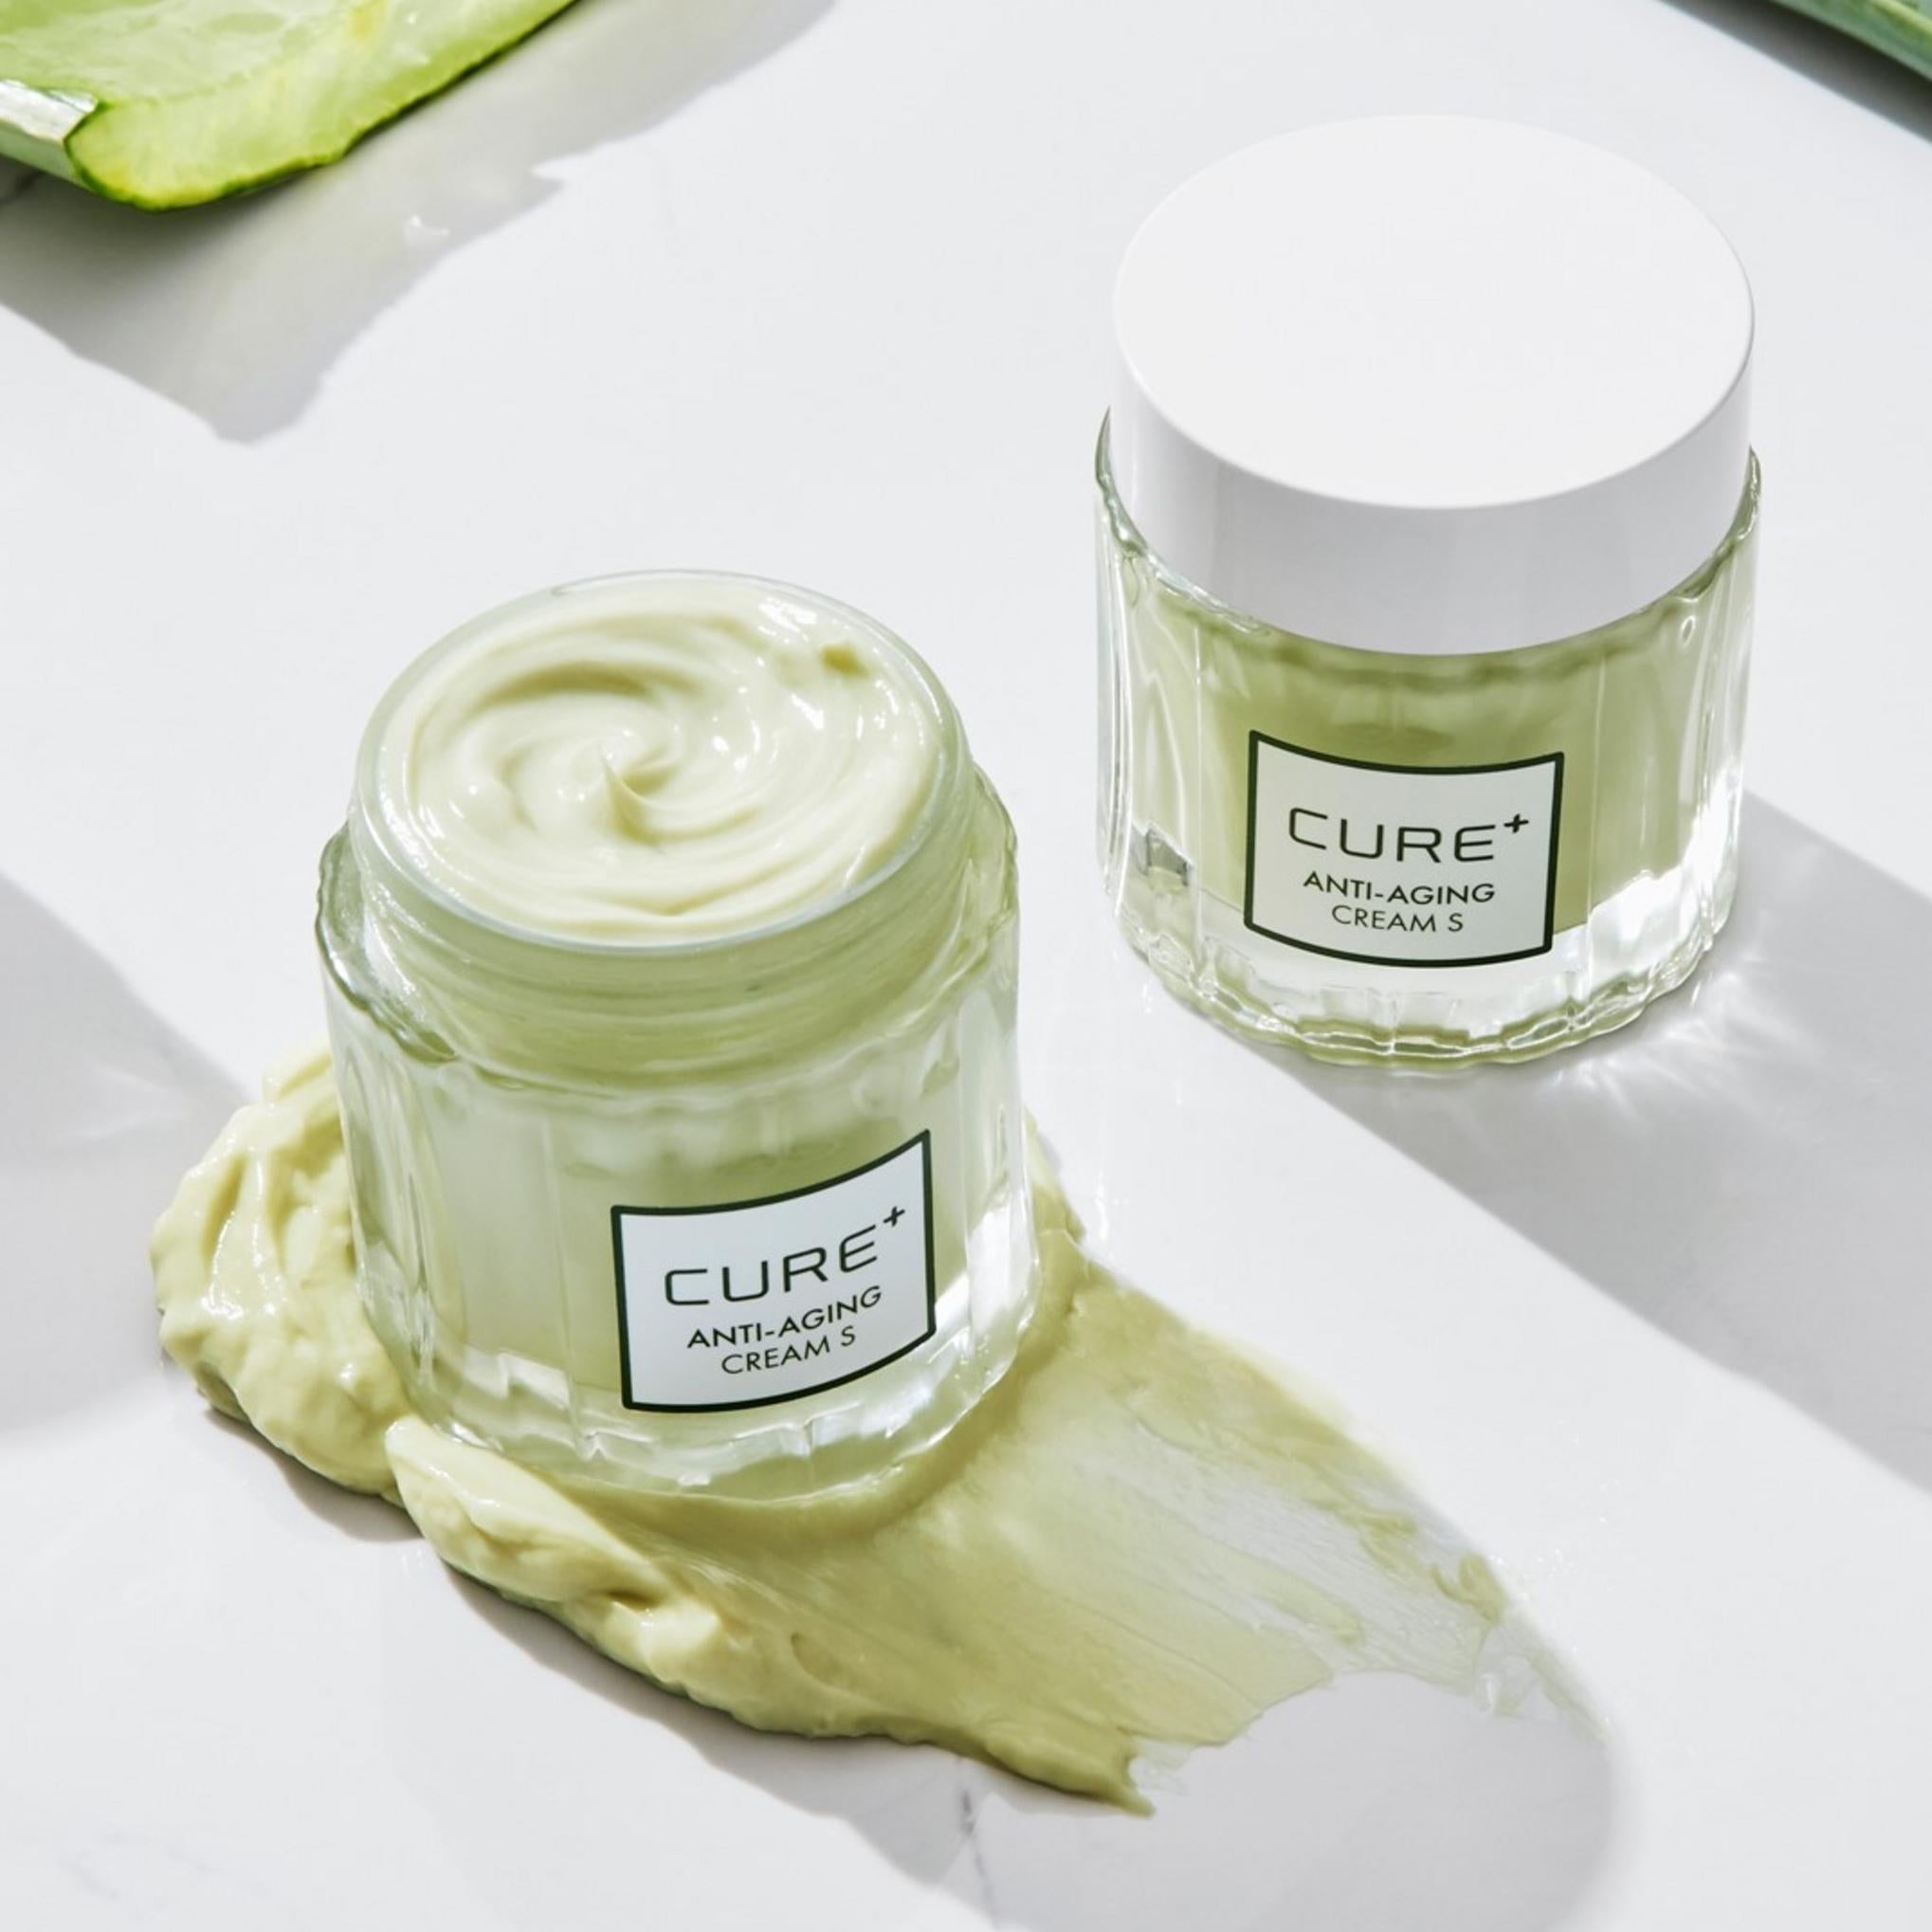 Kim Jung Moon Aloe Cure Anti-Aging Cream S 50g + 30g